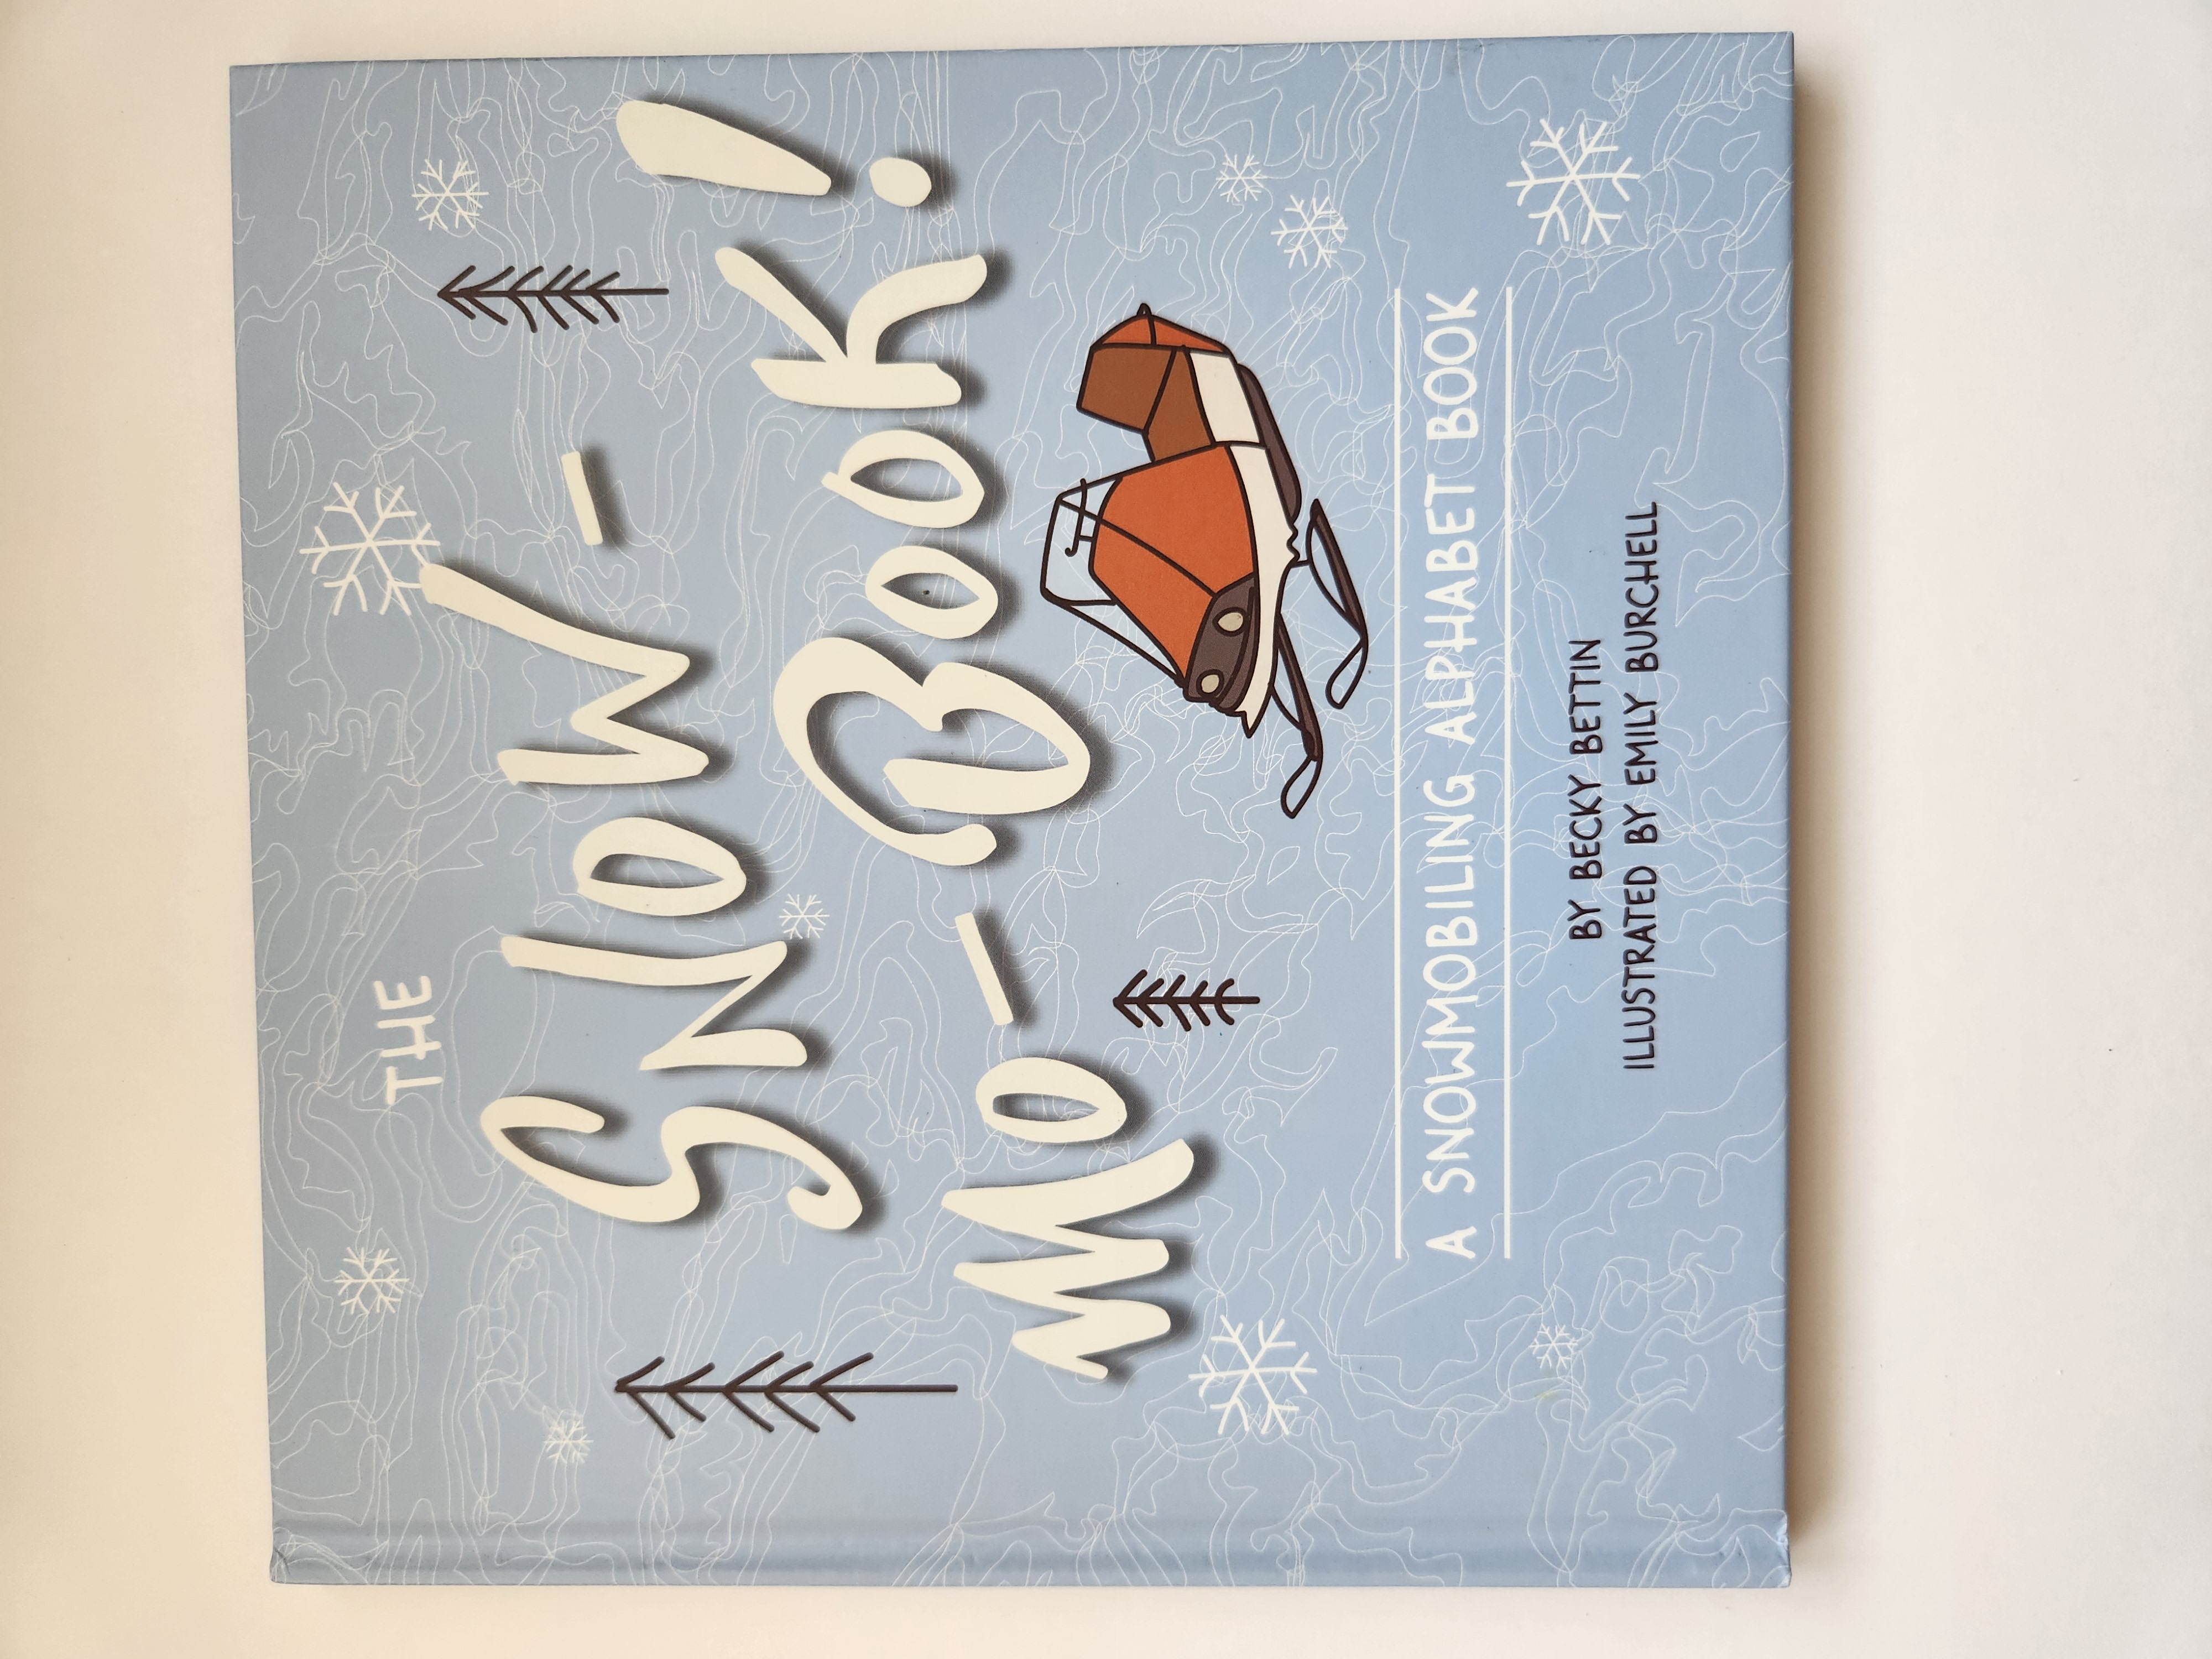 Children's Alphabet Book About Snowmobiles